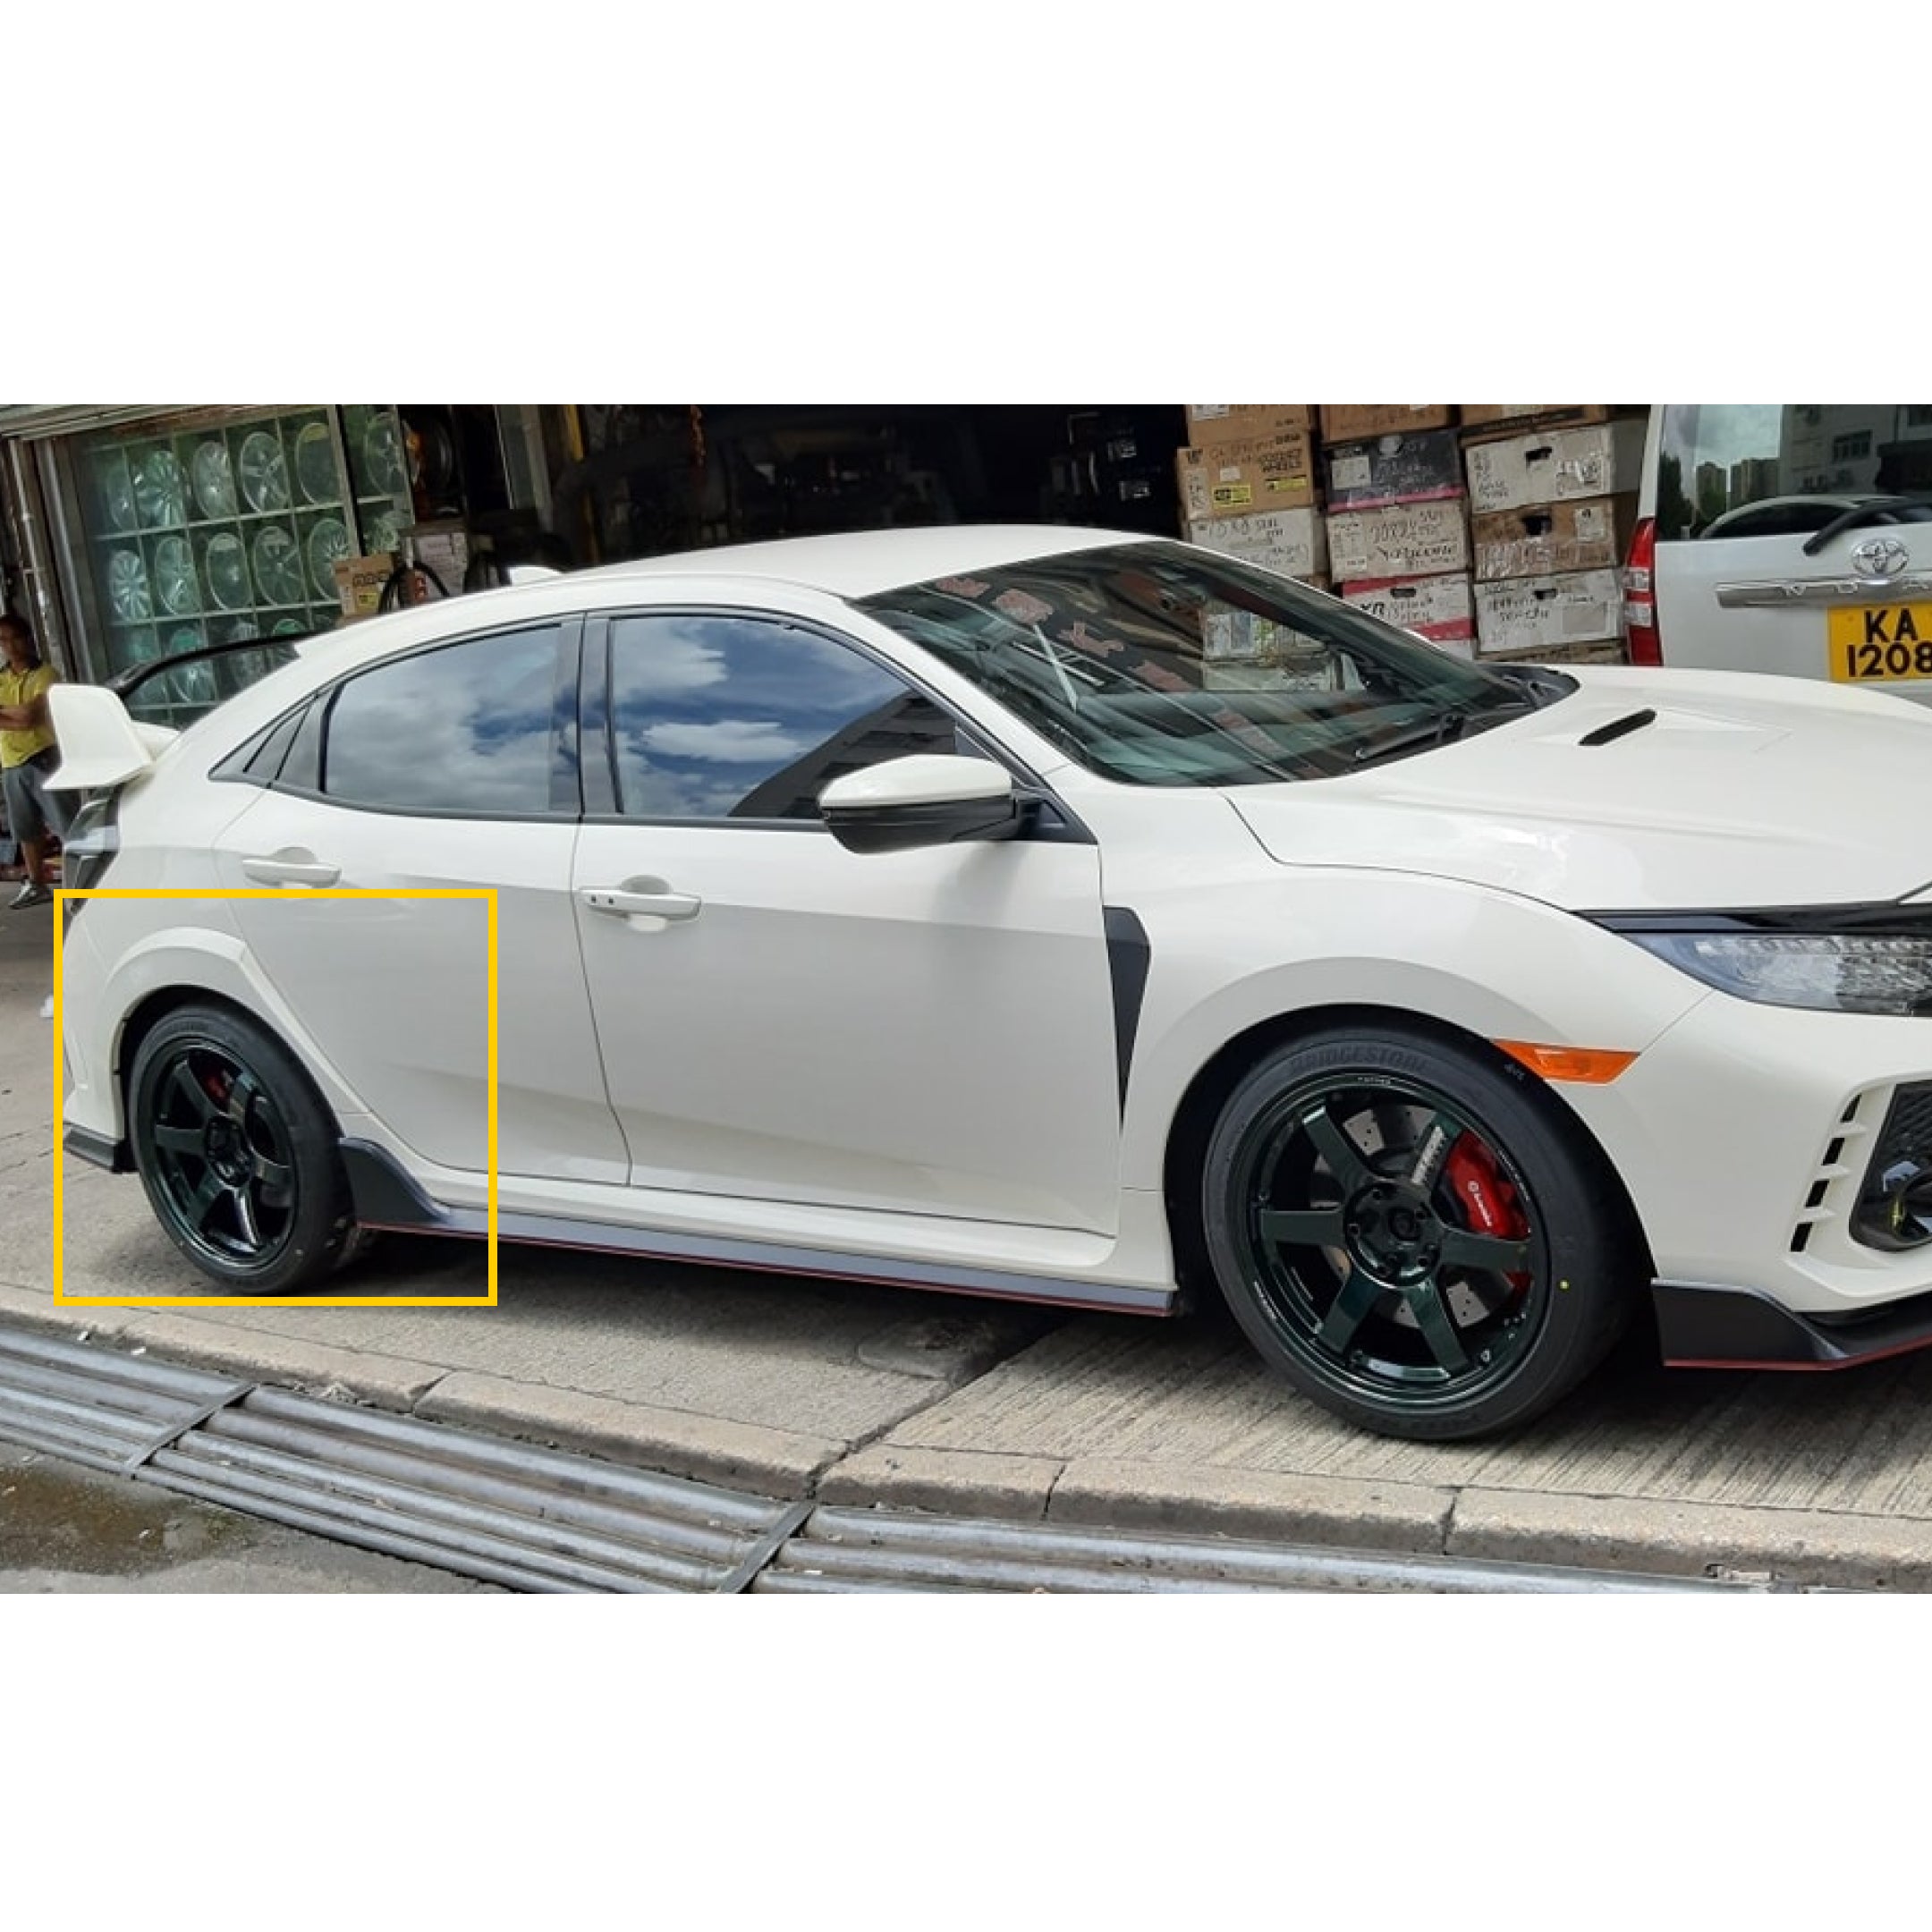 Ajuste 2016-2021 Honda Civic Sedan TYPE R estilo negro arco Flare guardabarros trasero cubierta